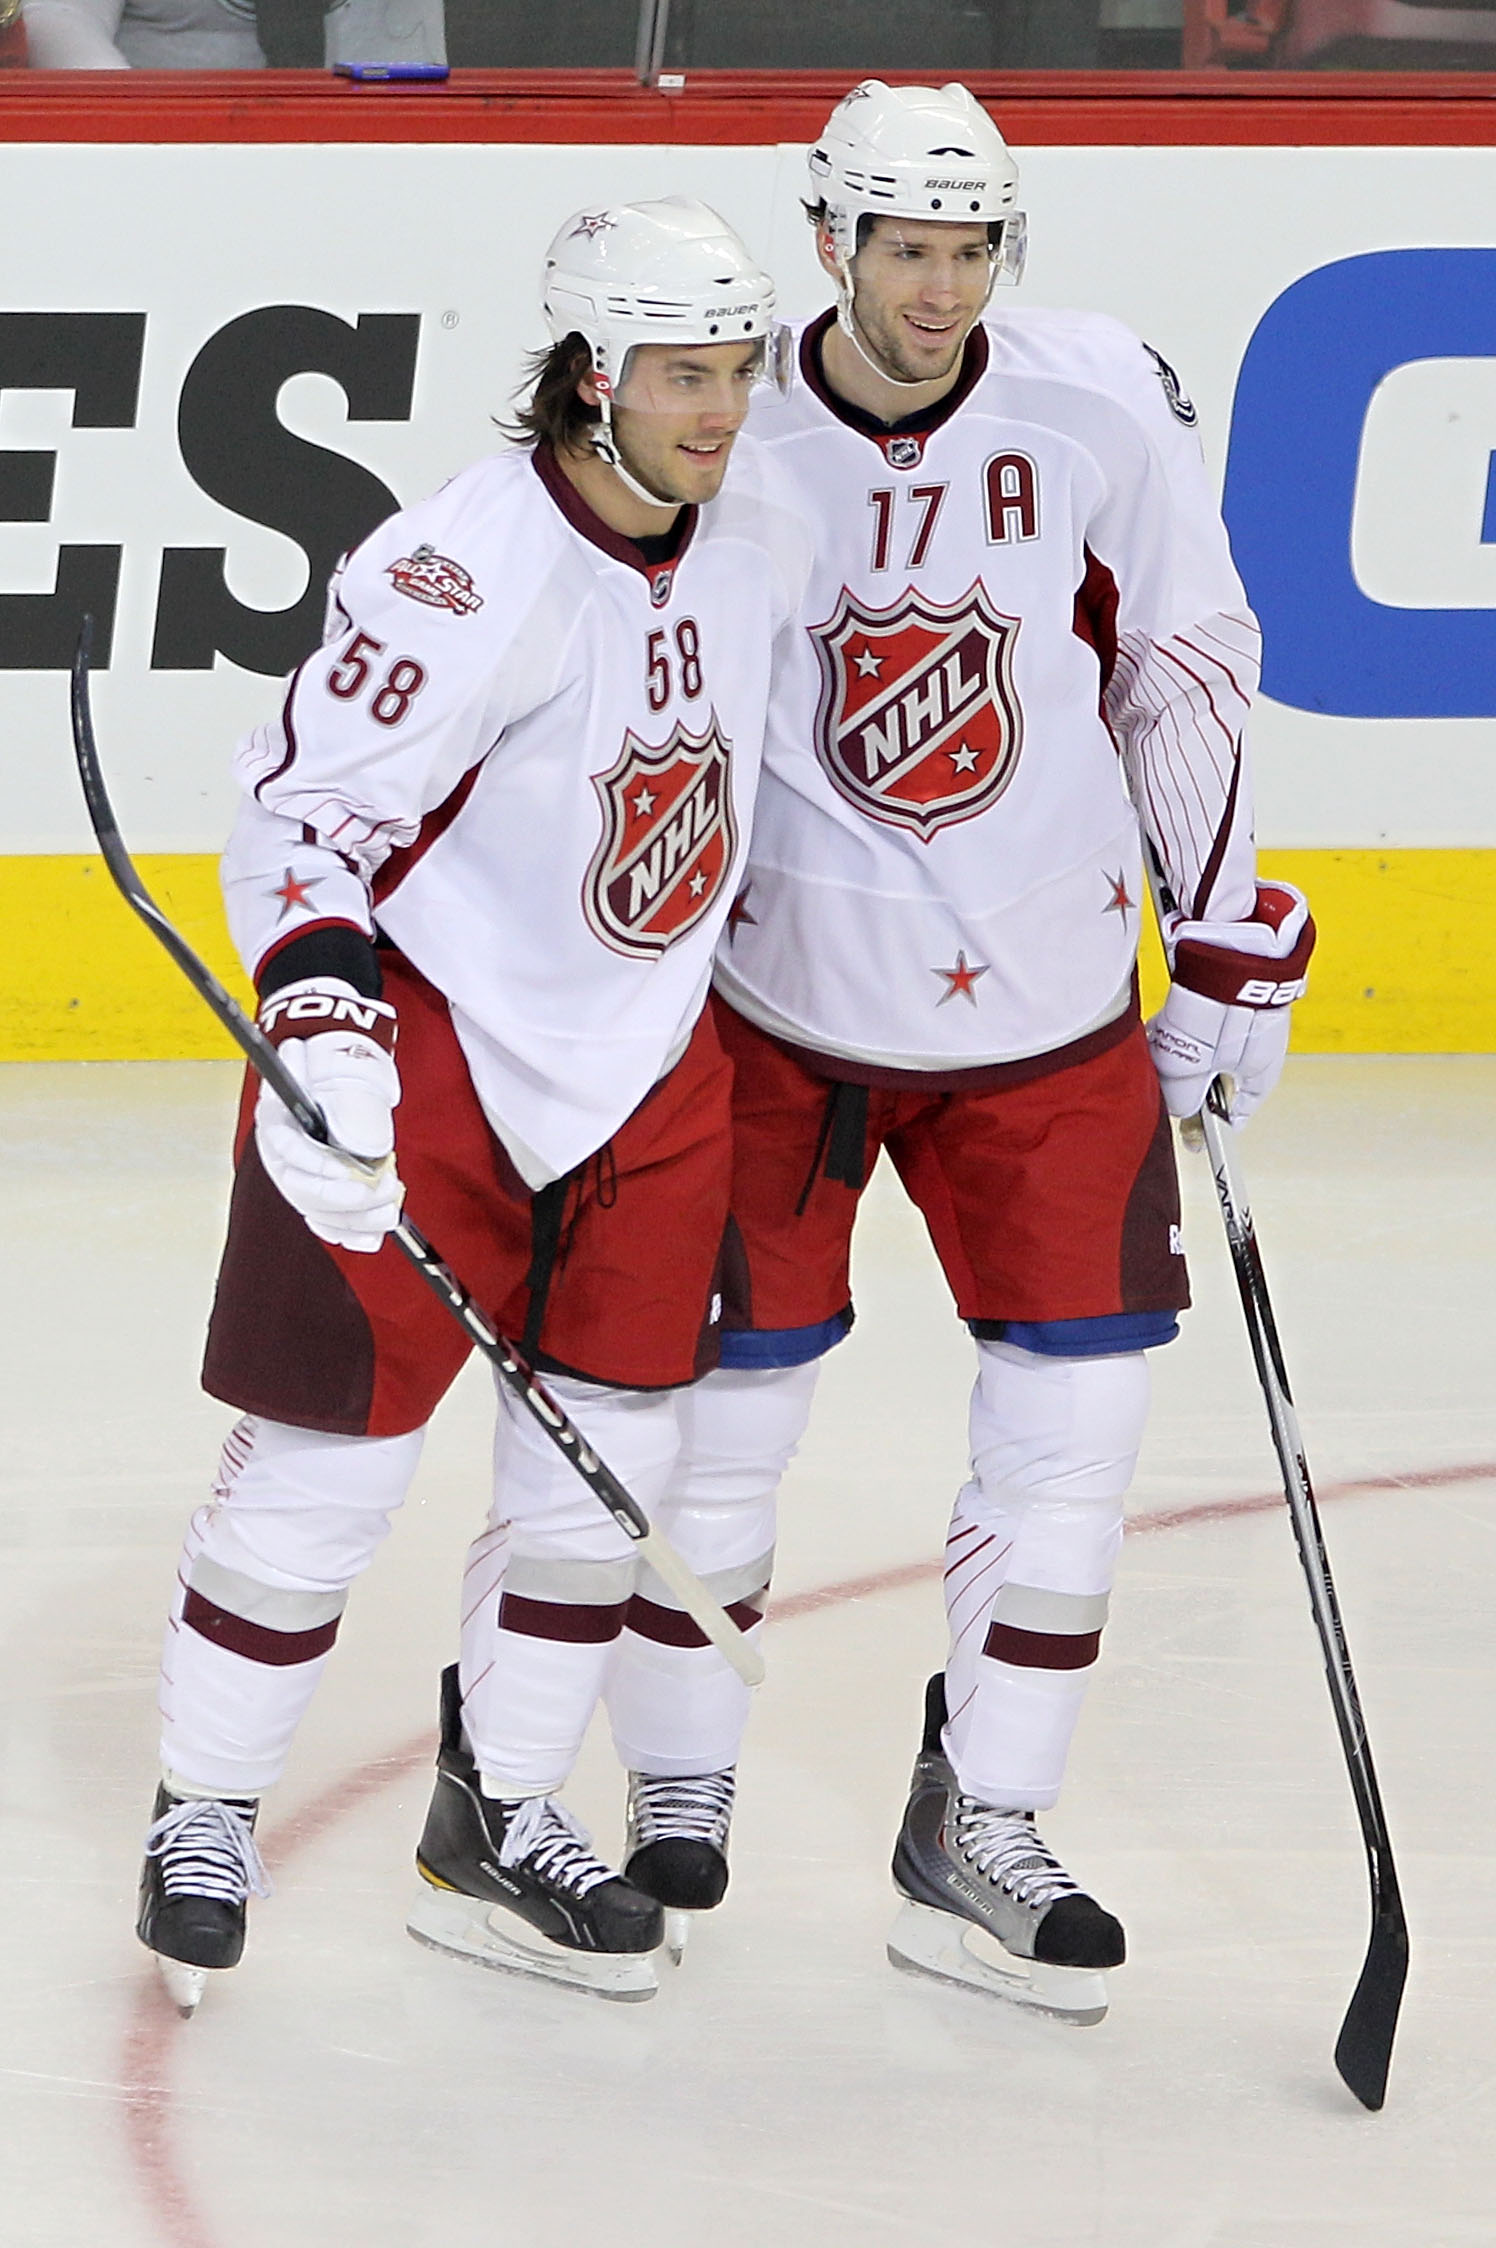 NHL 2011 Mock All-Star Draft: Team Staal vs. Team Lidstrom